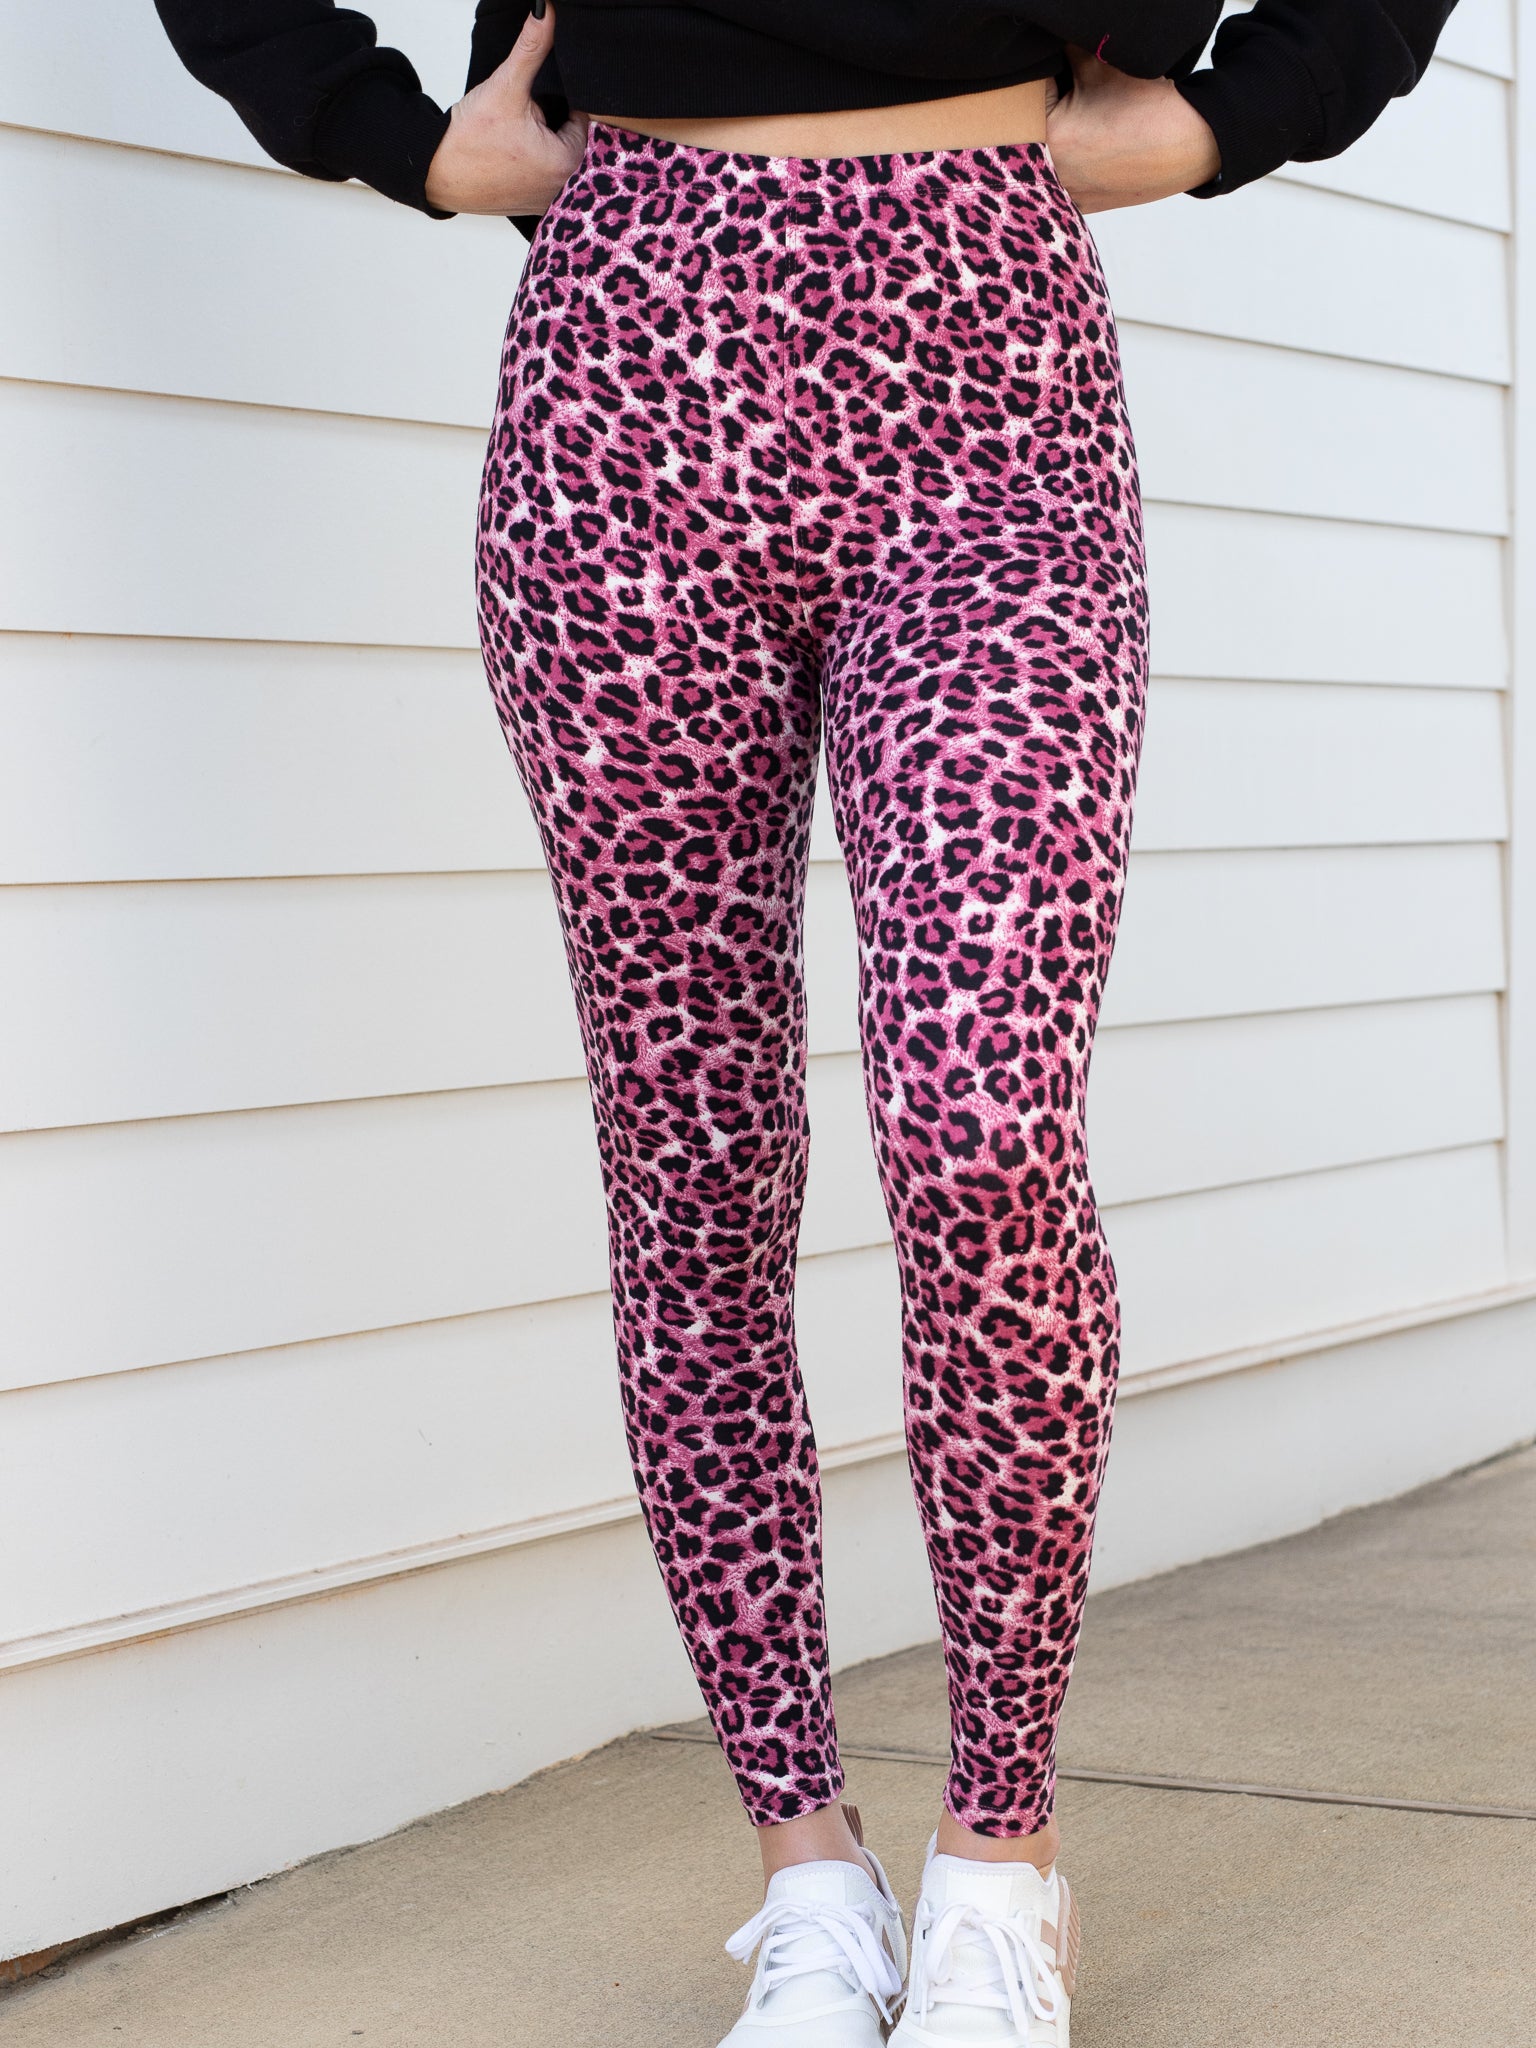 Neon Leopard Leggings | Fitness Yoga Pants